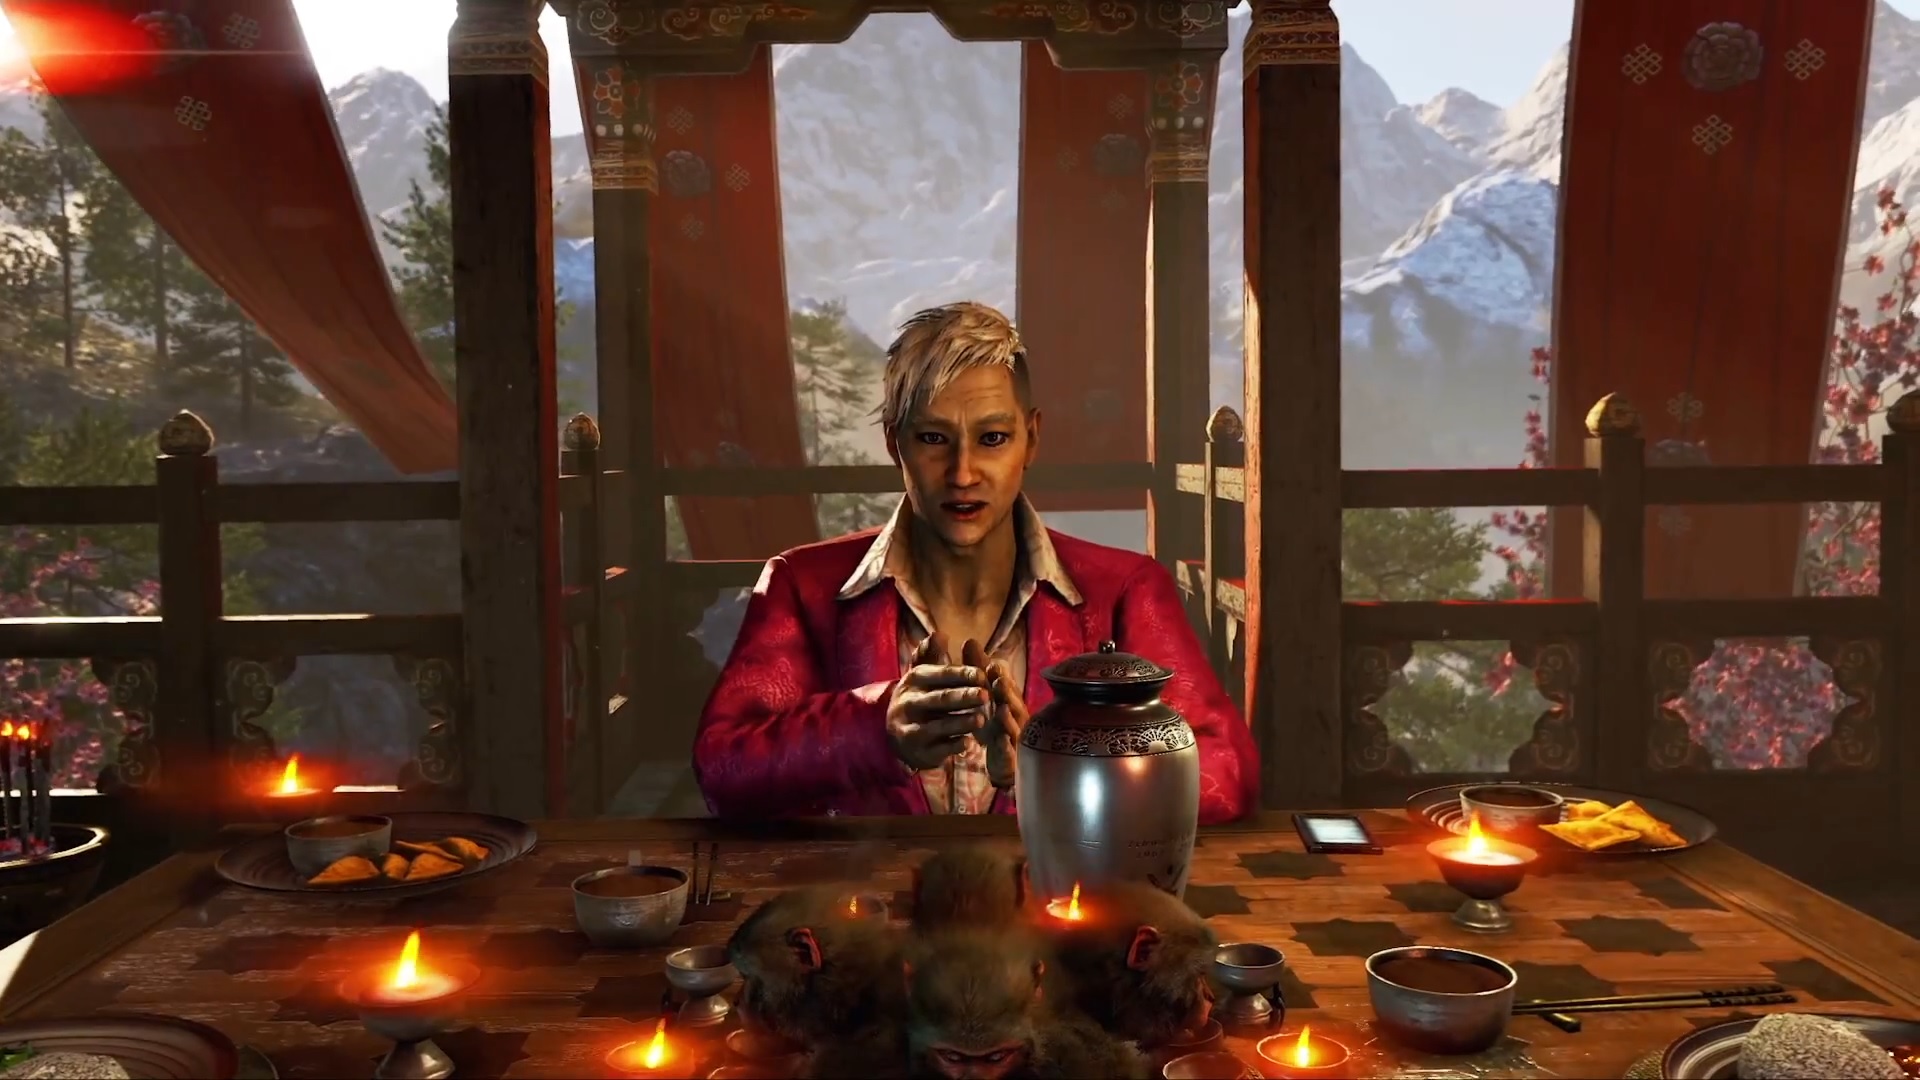 Far-Cry-4-trailer-showcases-King-of-Kyrat-Pagan-Min-bits-of-gameplay.jpg